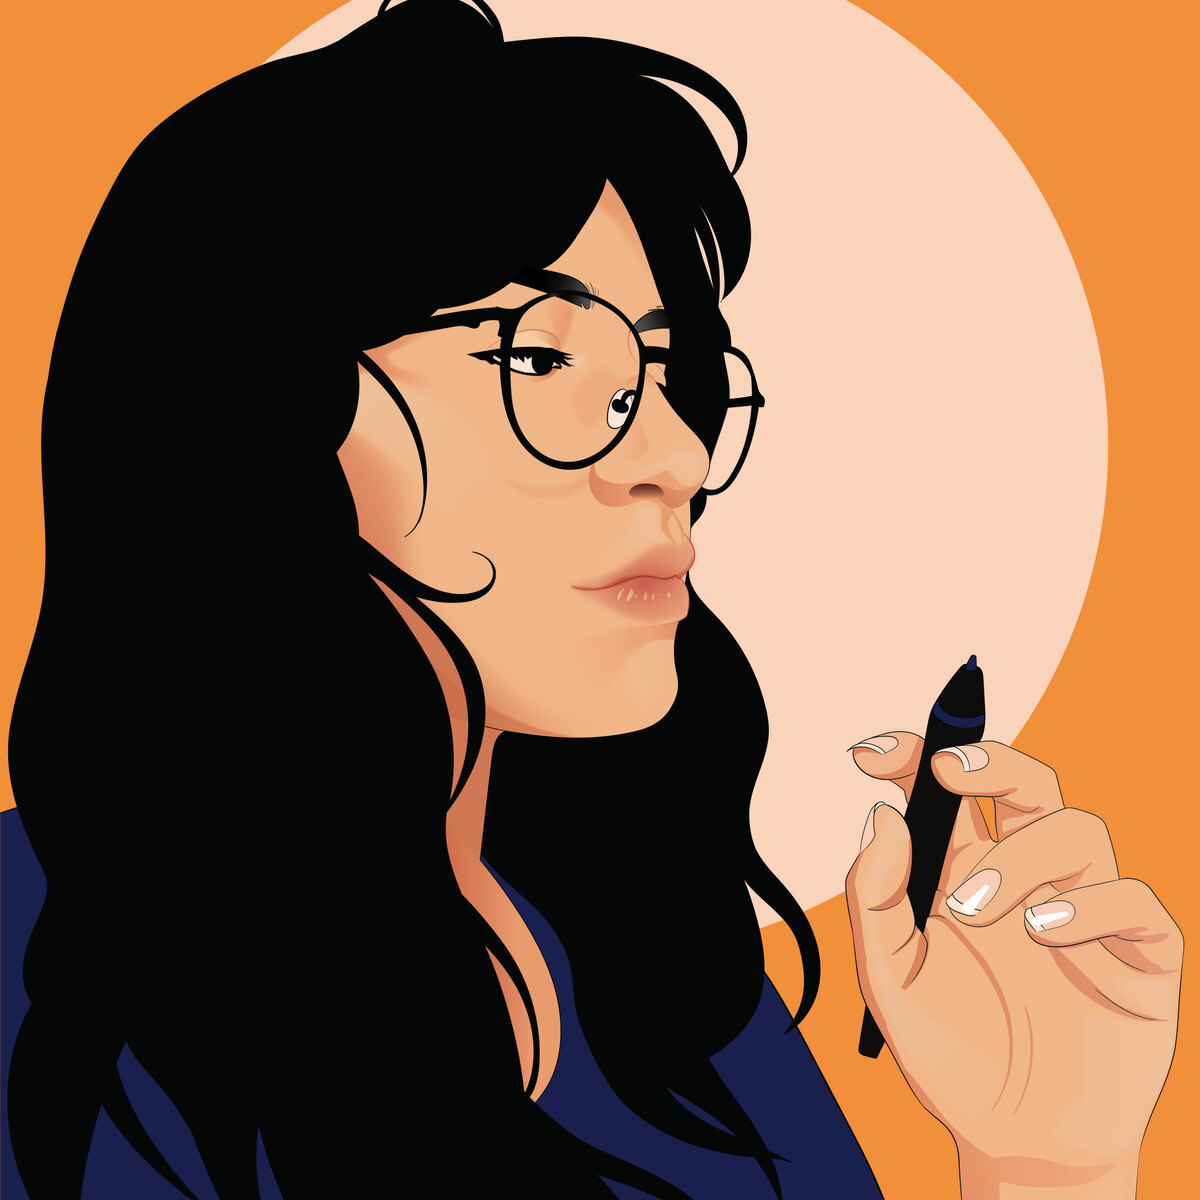 Self portrait vector illustration of Valeria Krumdieck made by valeria krumdieck, designer and illustrator